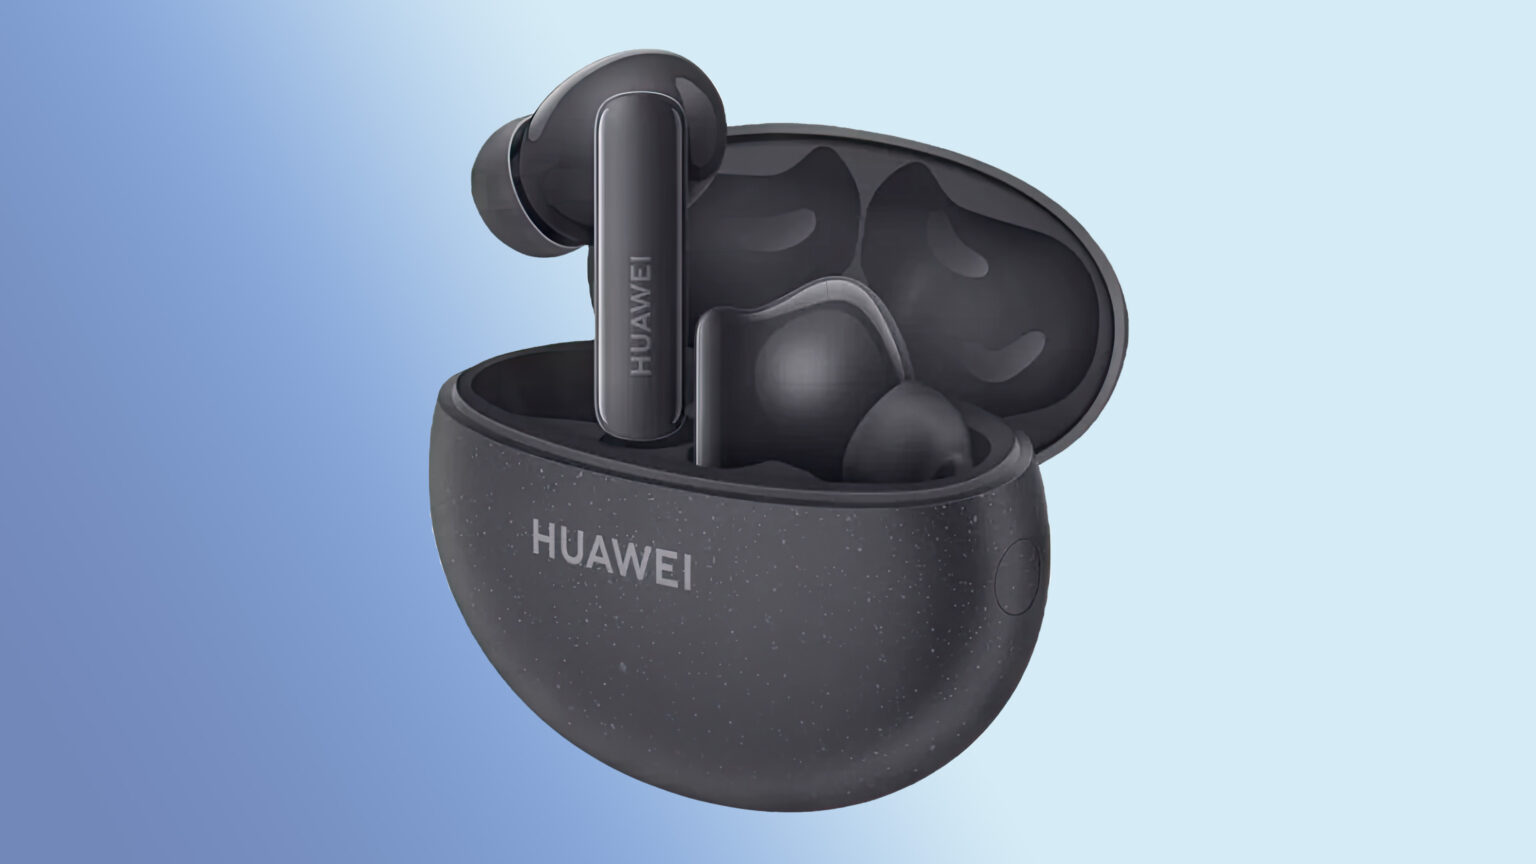 Ännu bättre budgetproppar från Huawei?